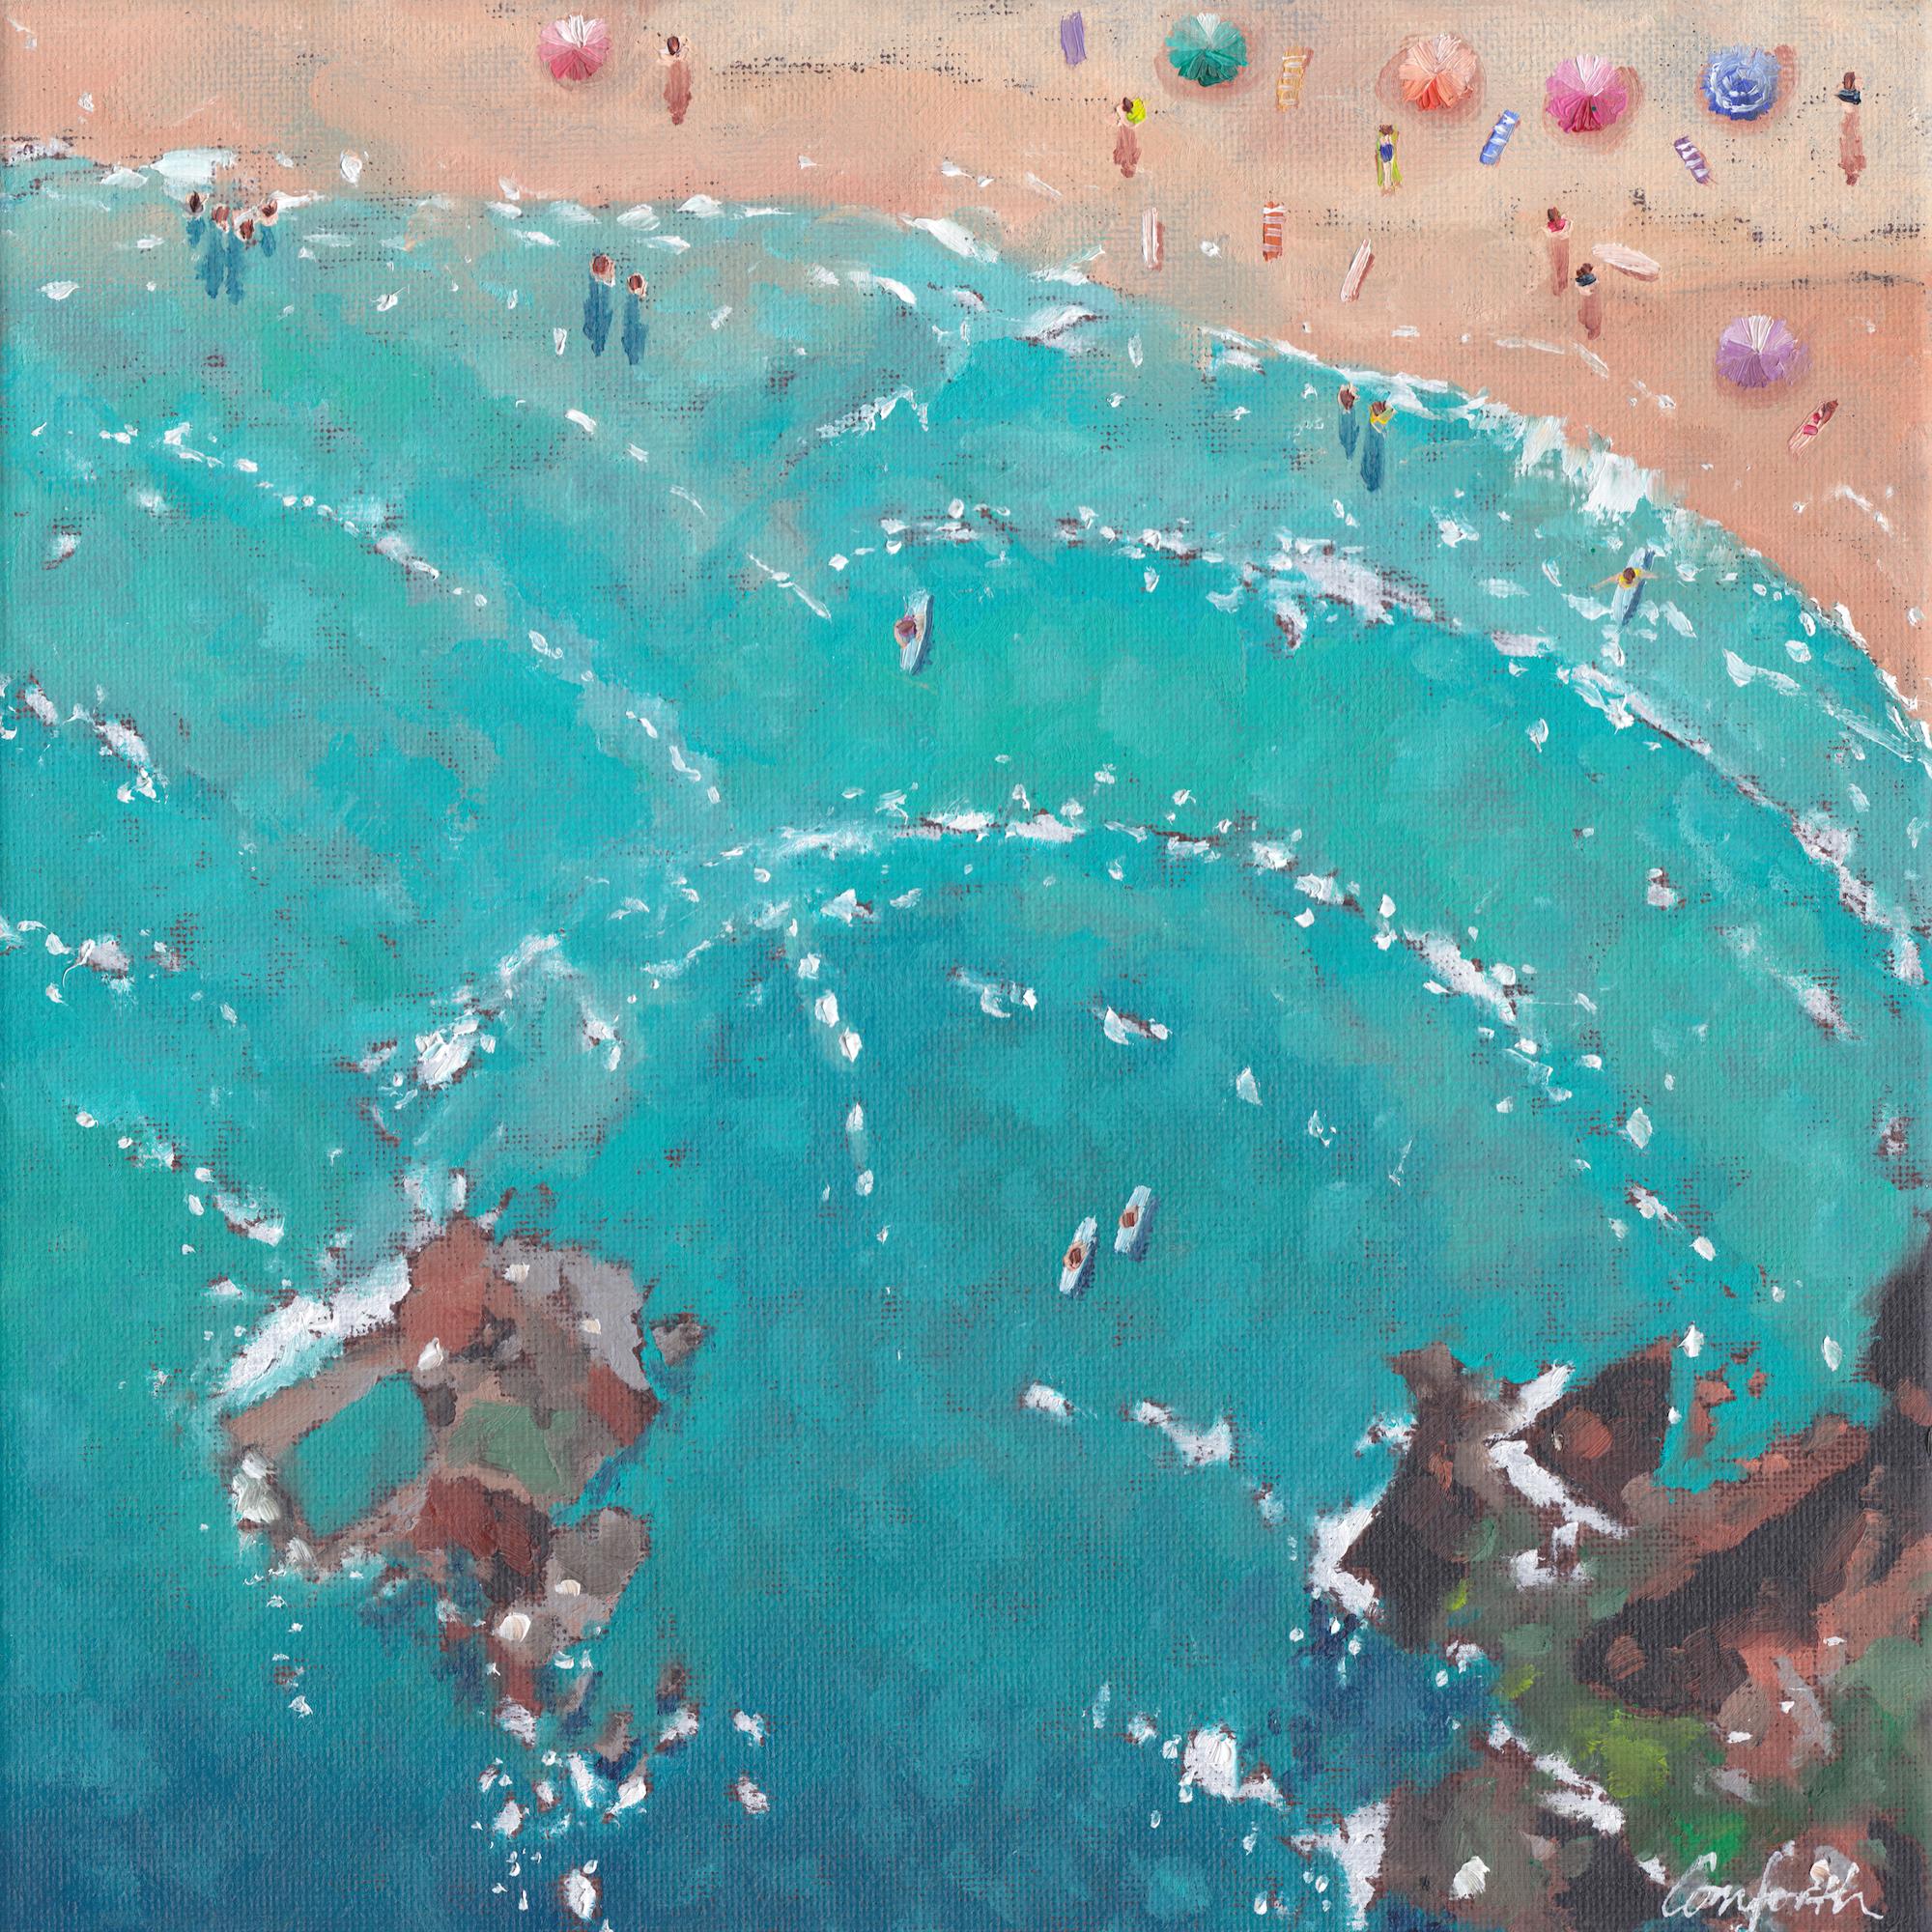 Perranporth-CONTEMPORARY impressionism Cornish seascape painting-Original Art